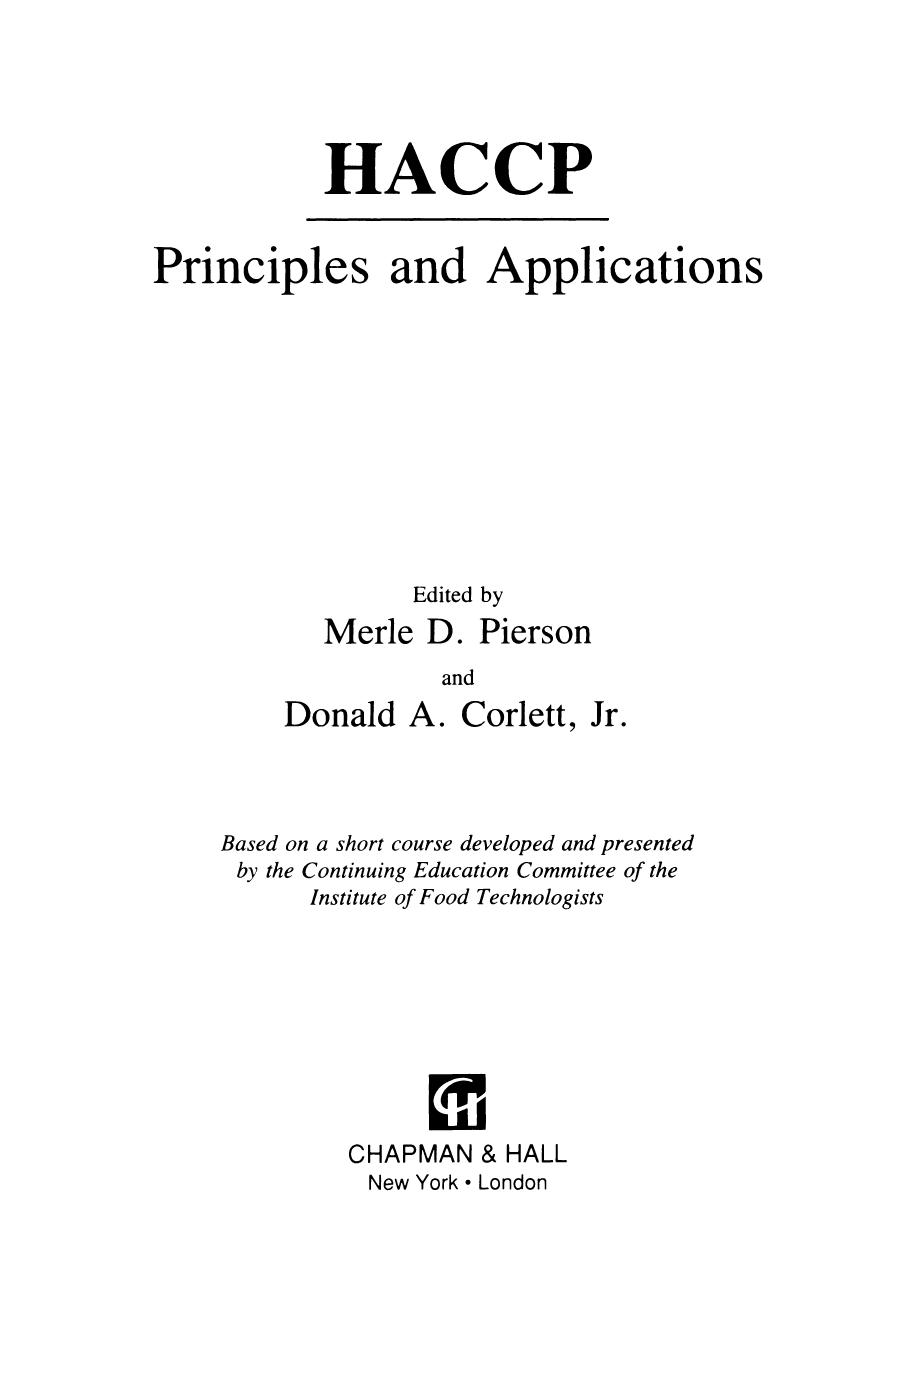 HACCP Principles and Applications 1992